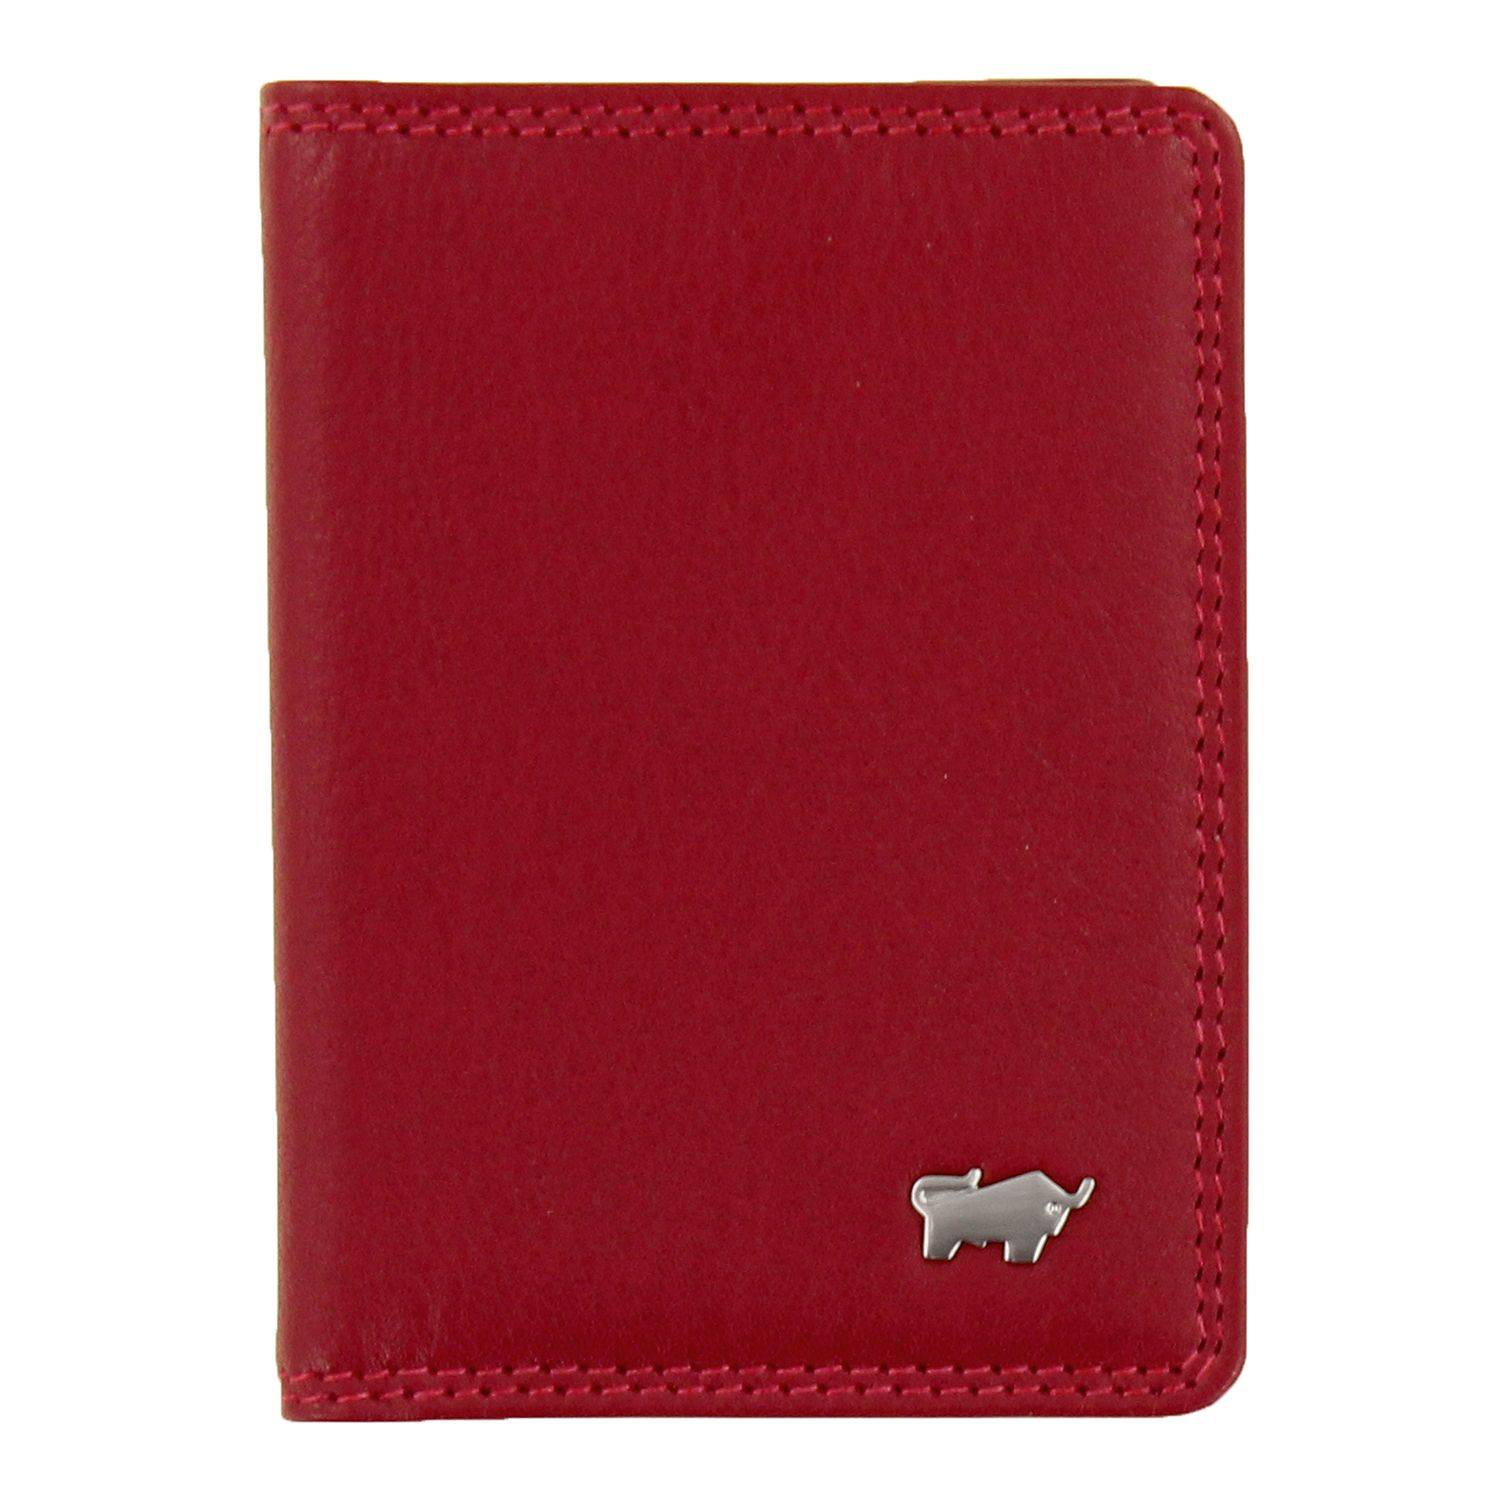 Чехол для кредитных карт Braun Buffel GOLF 2.0 Card Case 10CS 90446, цвет красный, размер ONE SIZE - фото 1